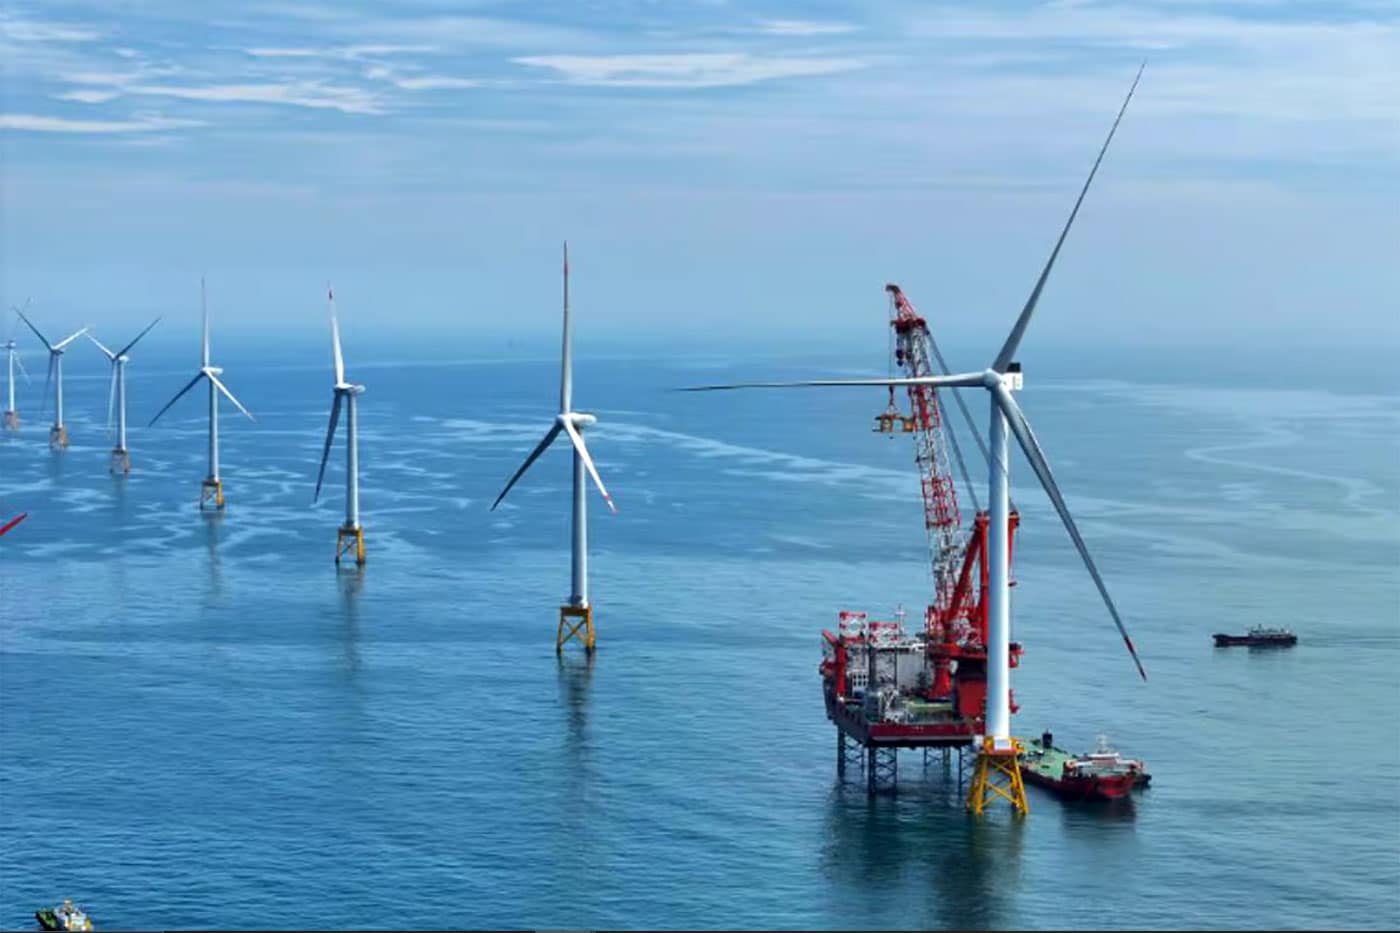 The image shows a 16-megawatt wind turbine installed at the Fujian offshore wind farm.